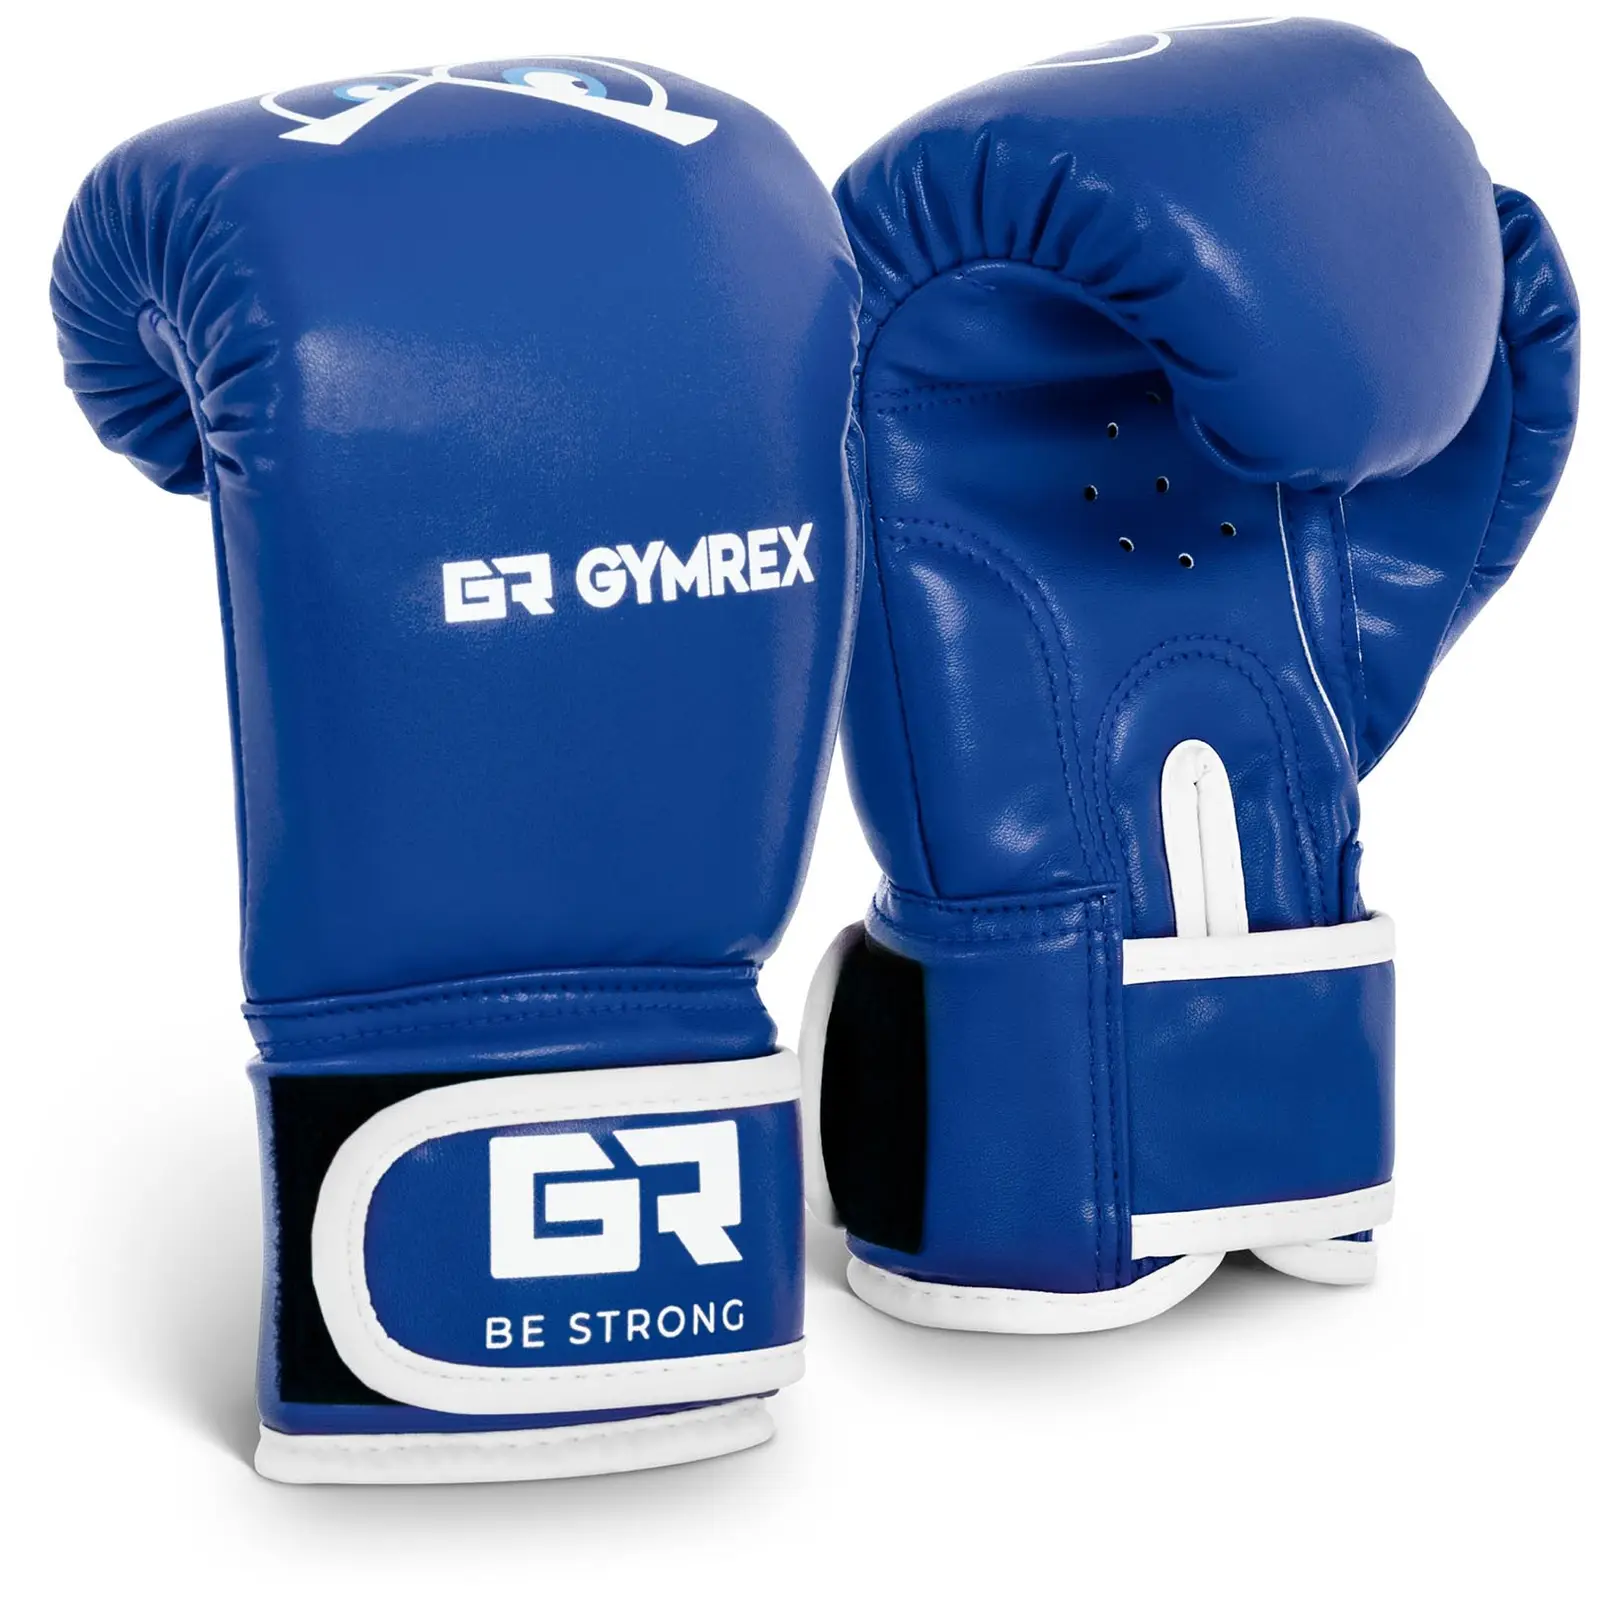 gymrex boxhandschuhe kinder - 4 oz - blau, blu